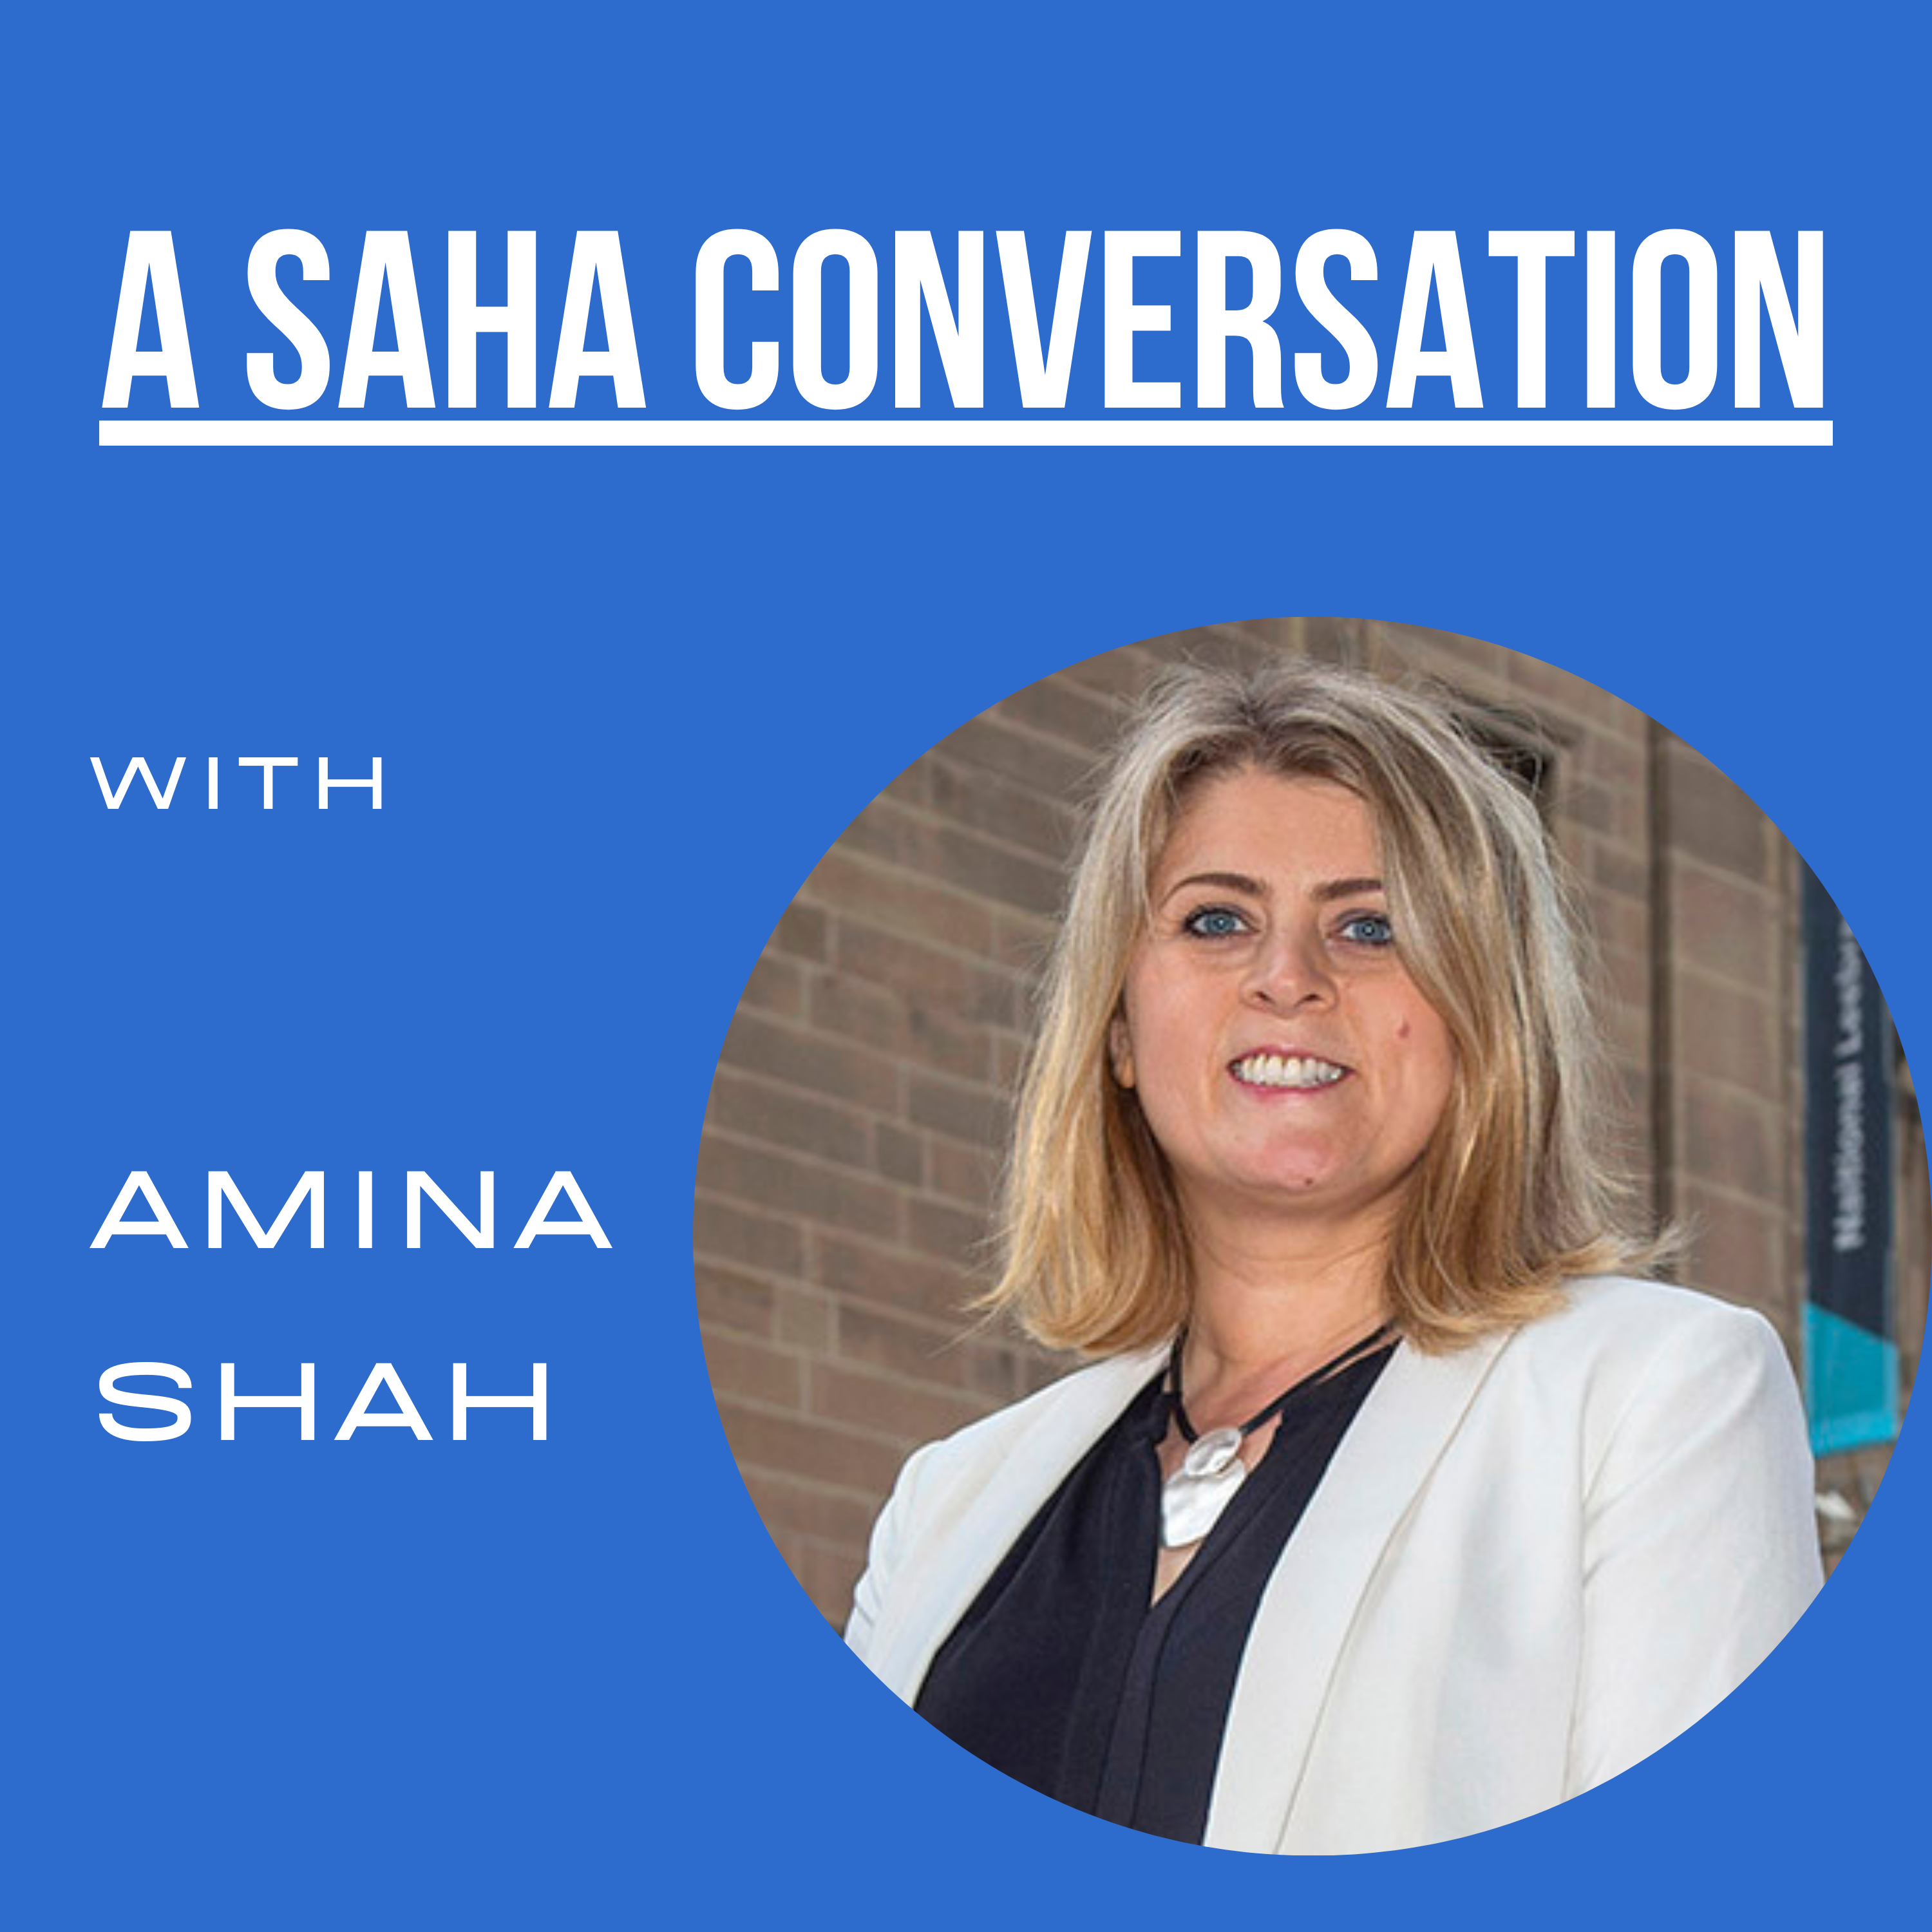 A SAHA Conversation with Amina Shah